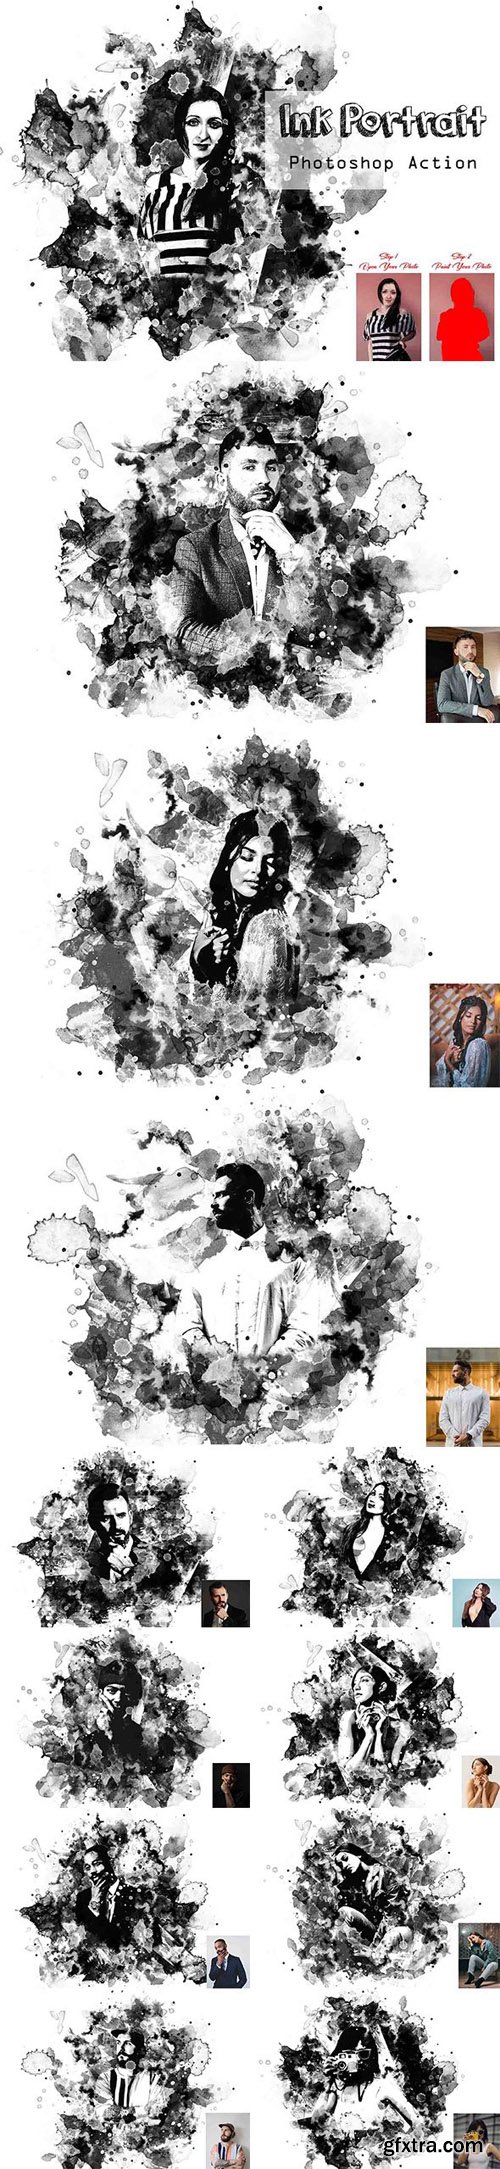 Ink Portrait Photoshop Action + Brushes